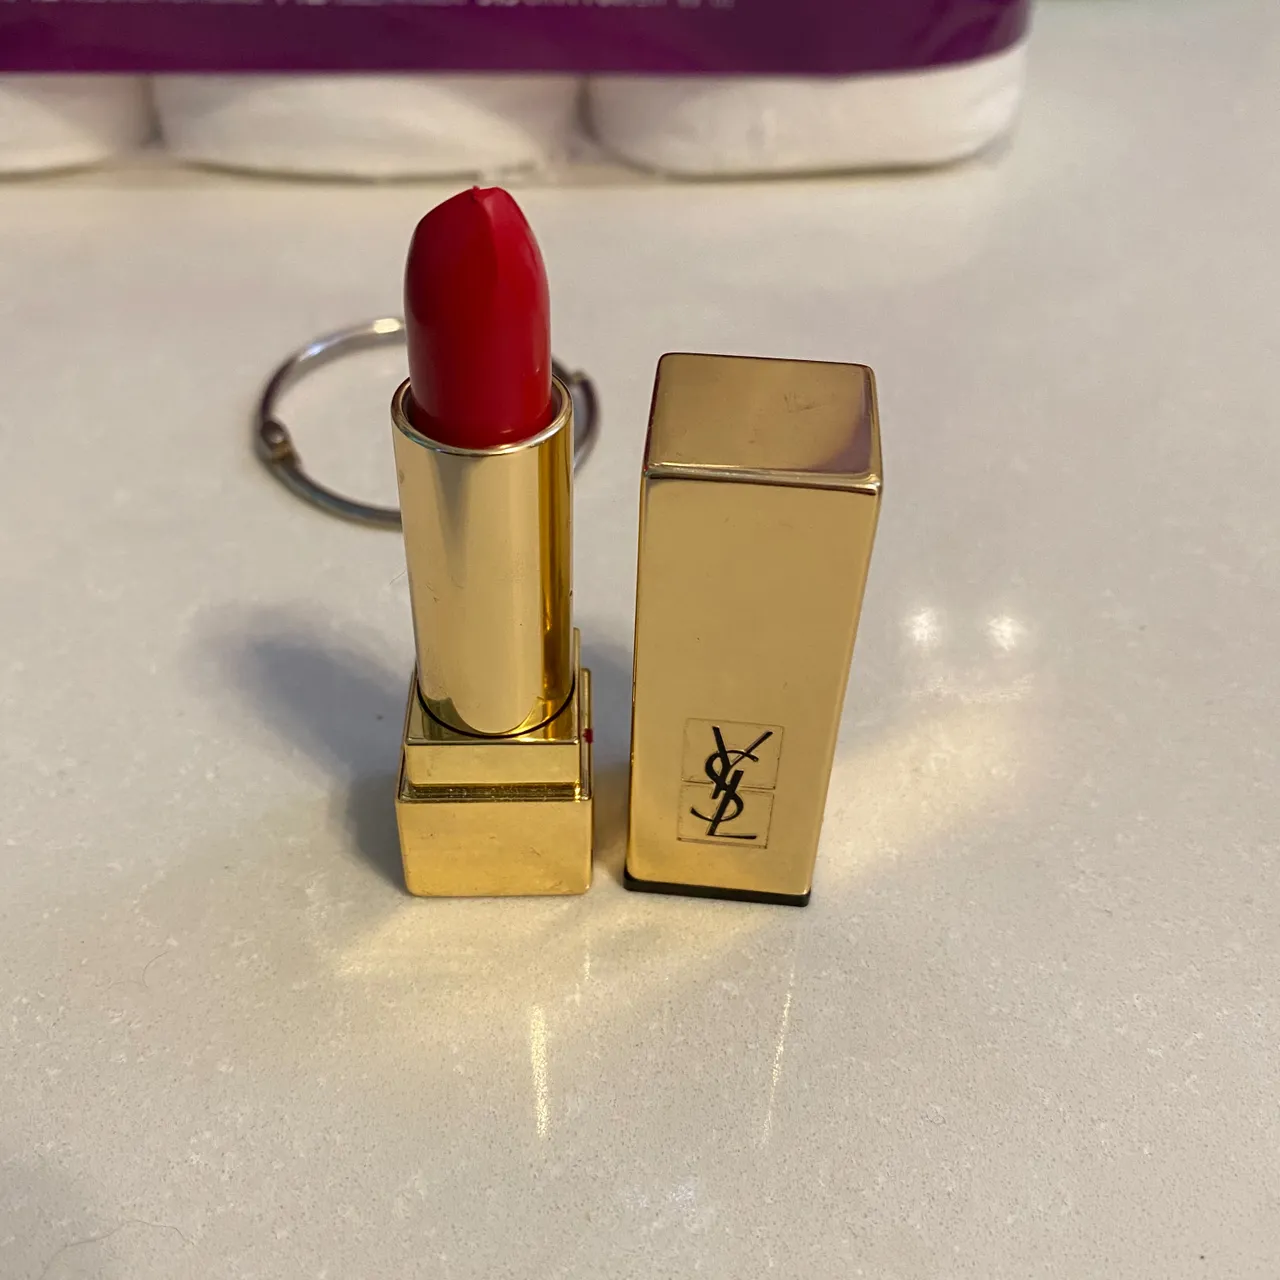 Yves Saint Laurent Red lipstick photo 1